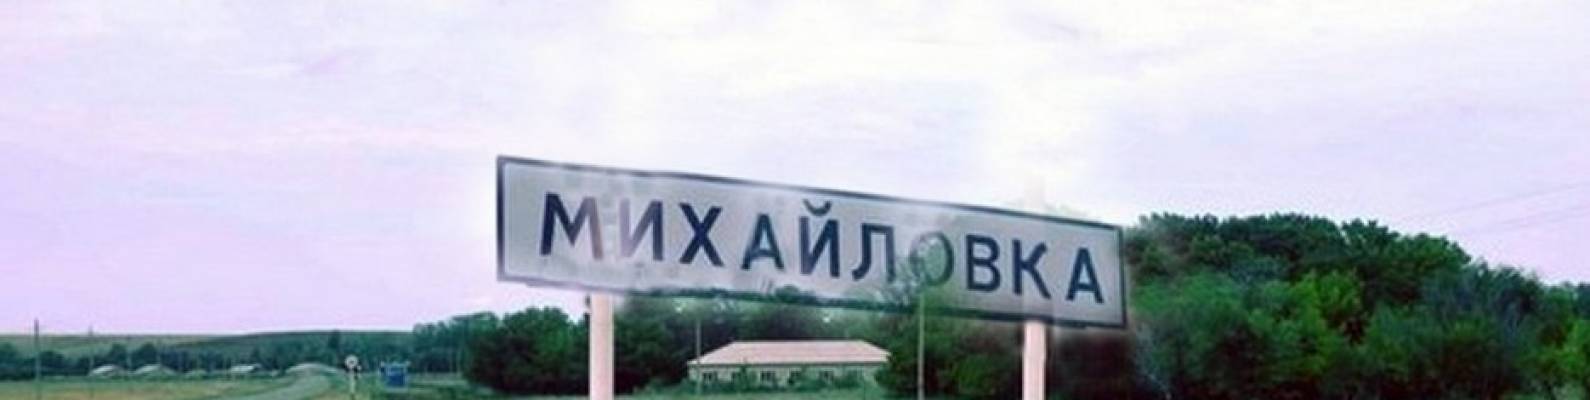  село Михайловка